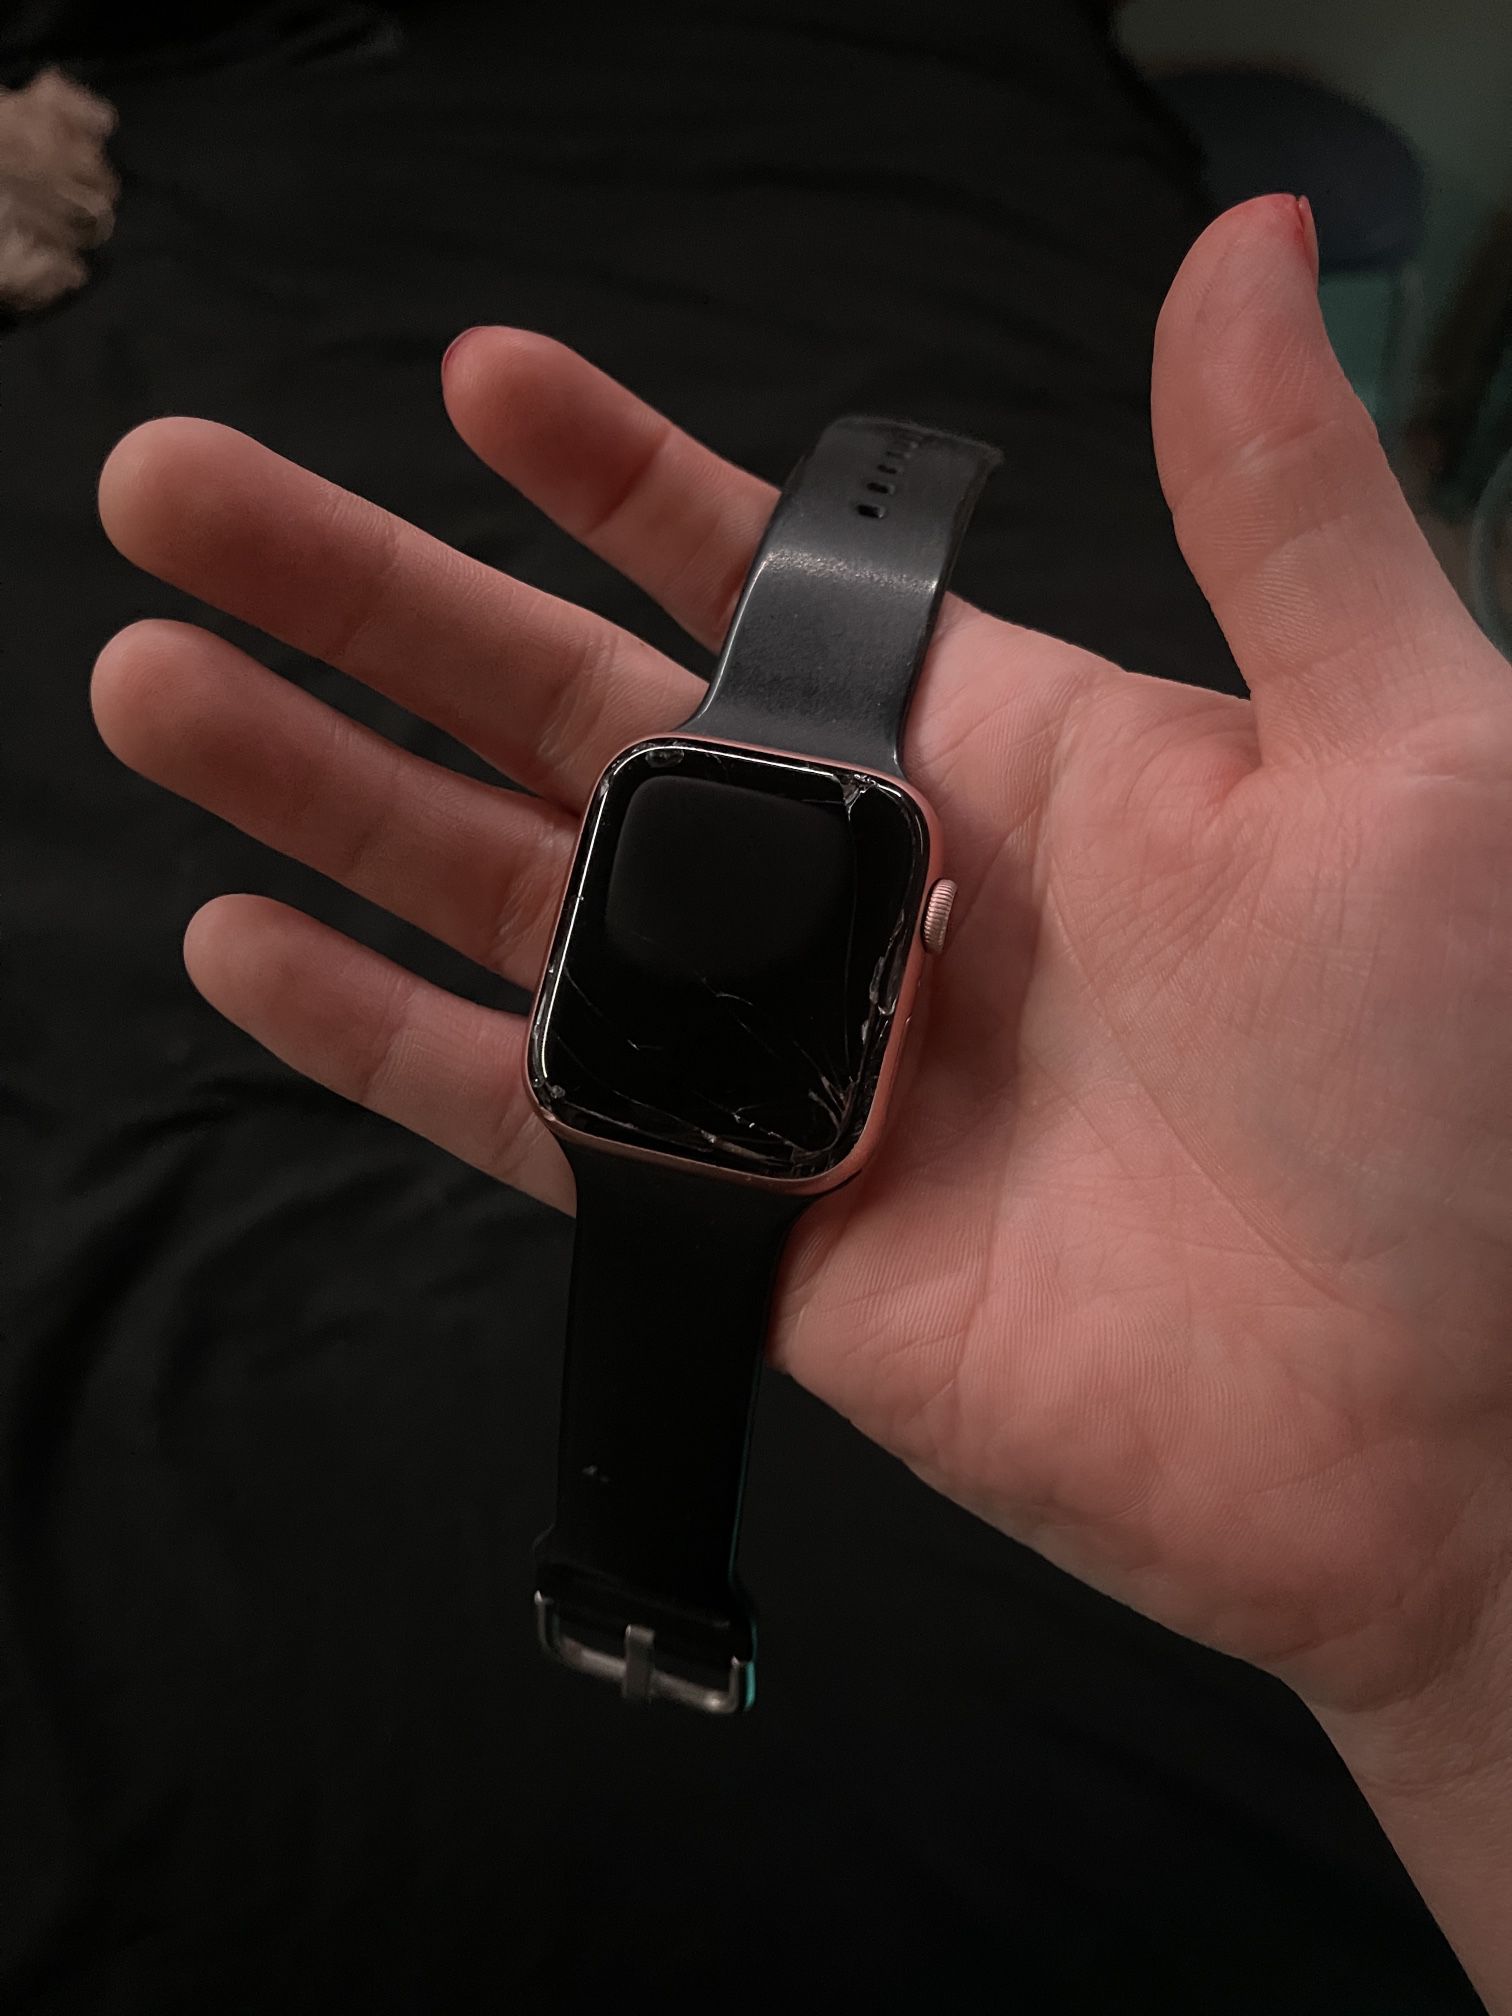 [WATER DAMAGE] Apple Watch Series 4 (44mm)